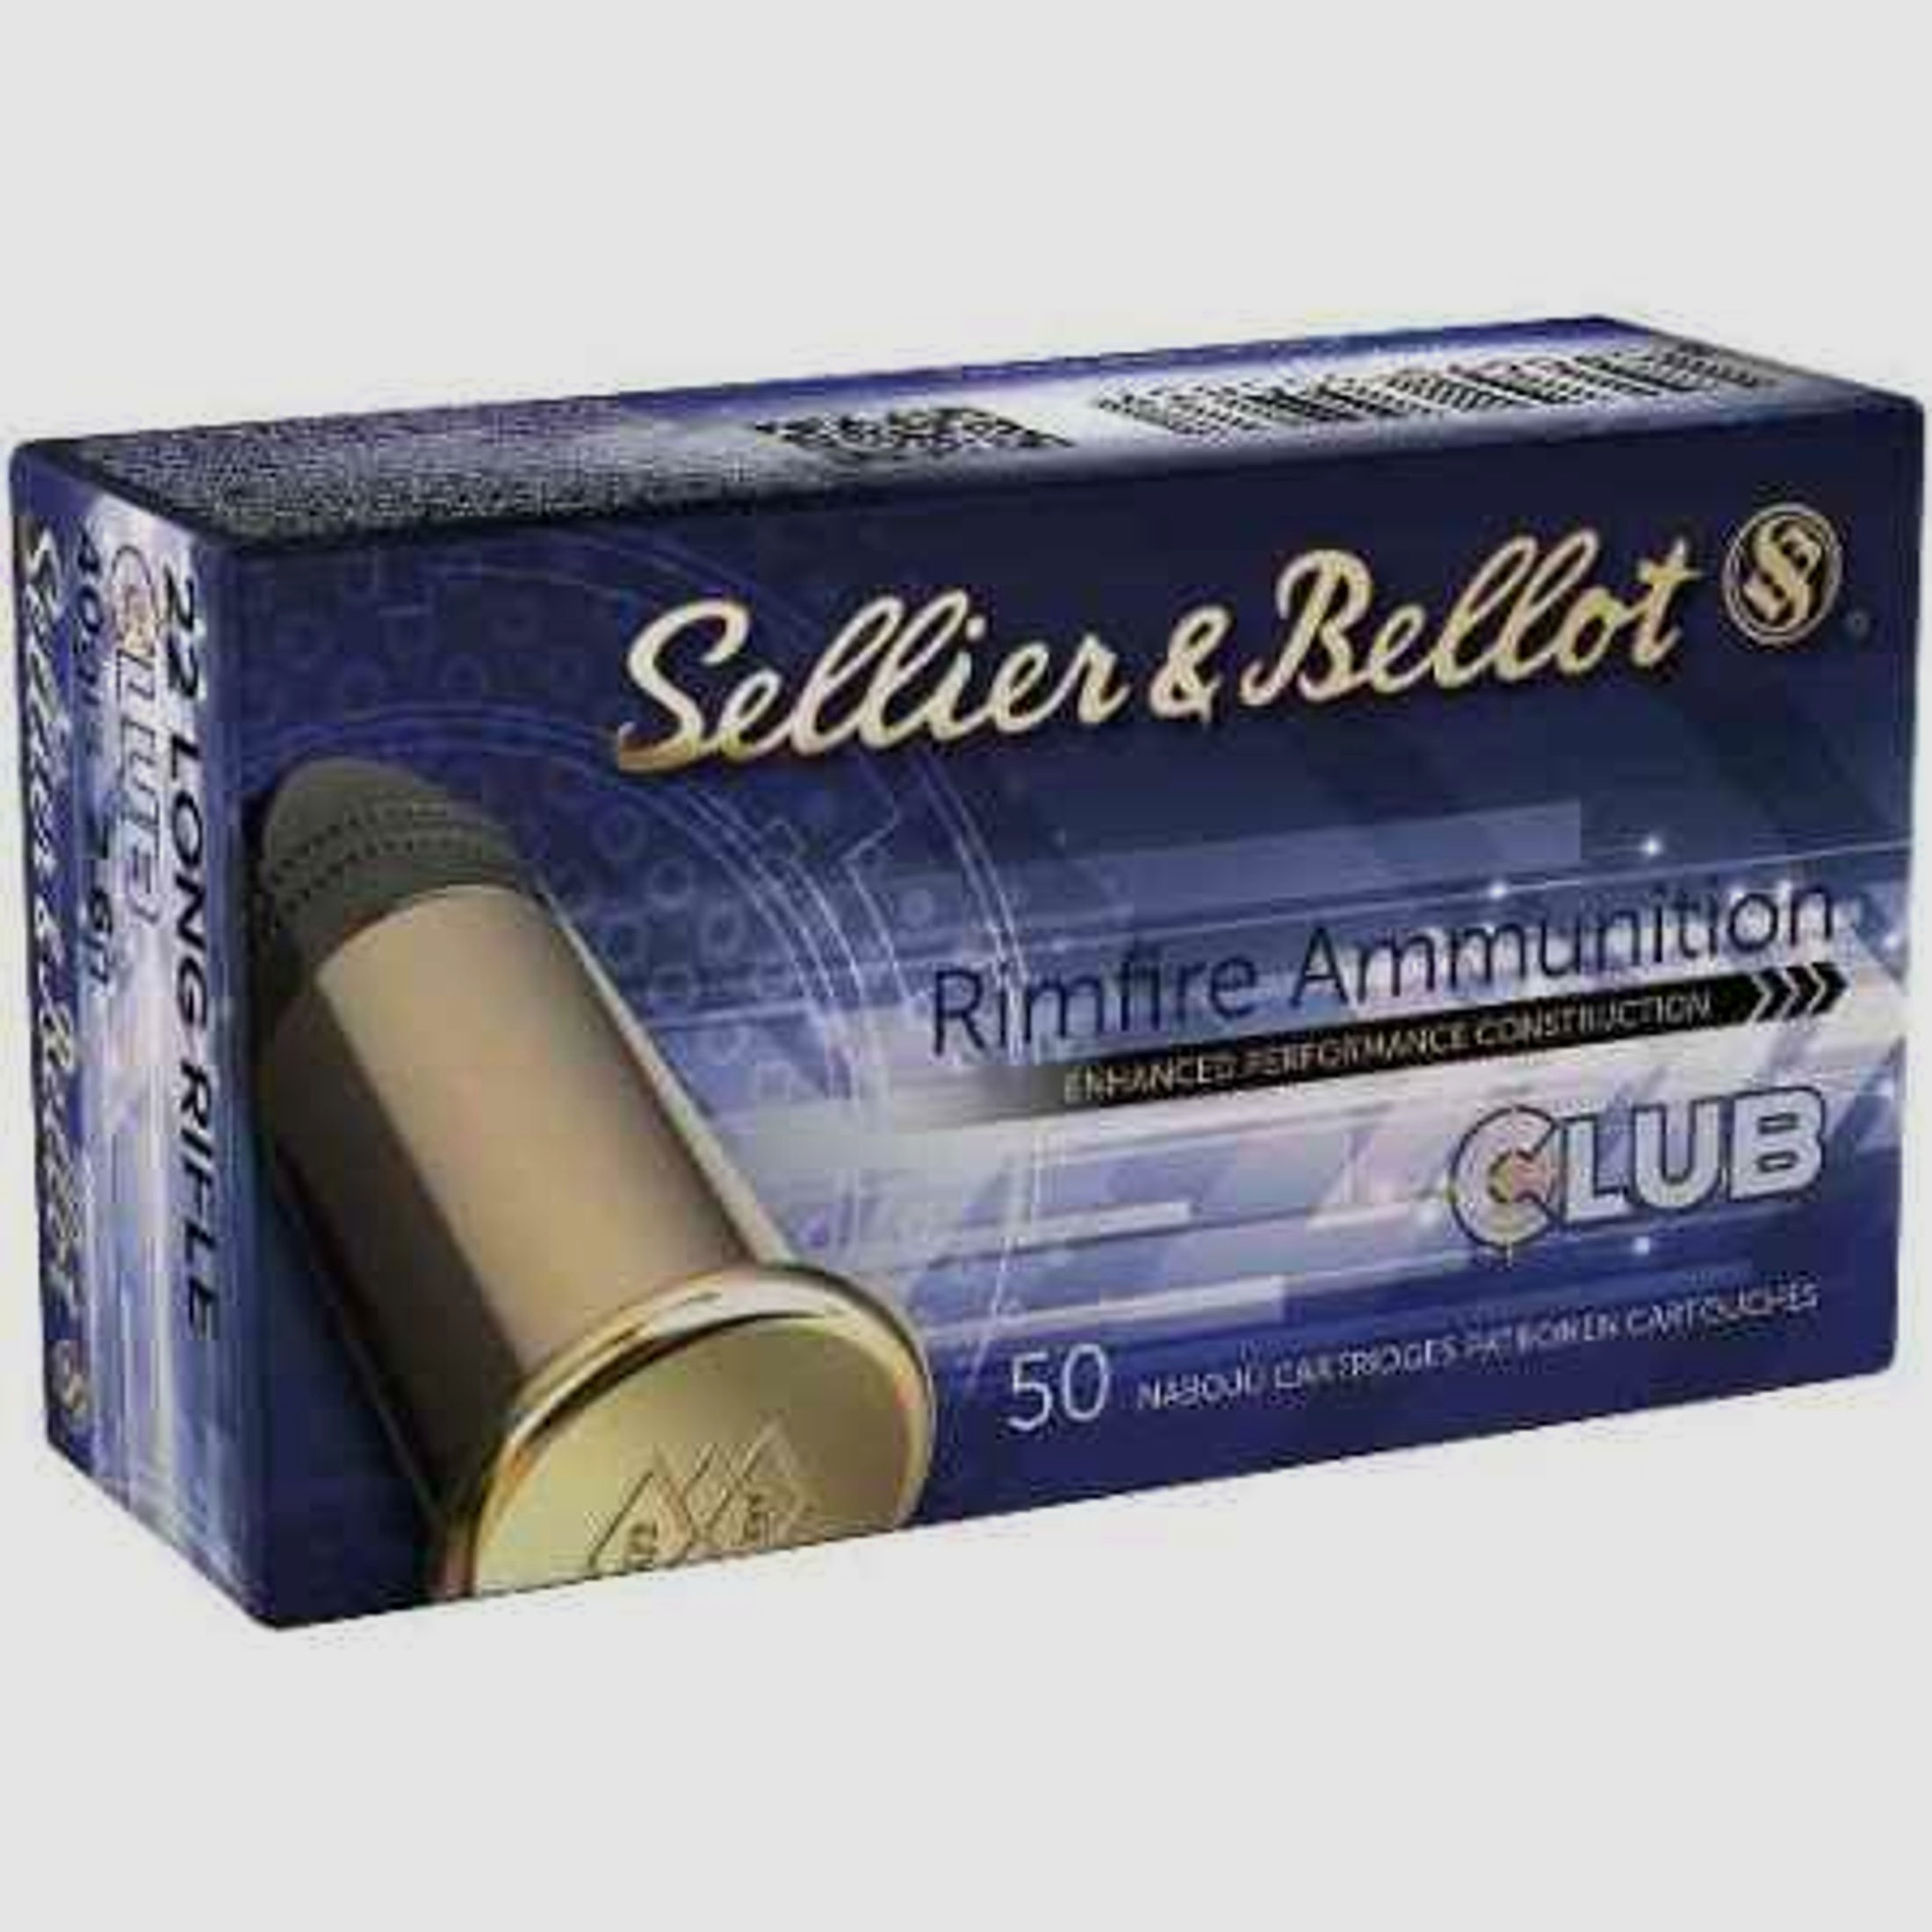 Sellier & Bellot .22 LR CLUB, Packung mit 50 Patronen